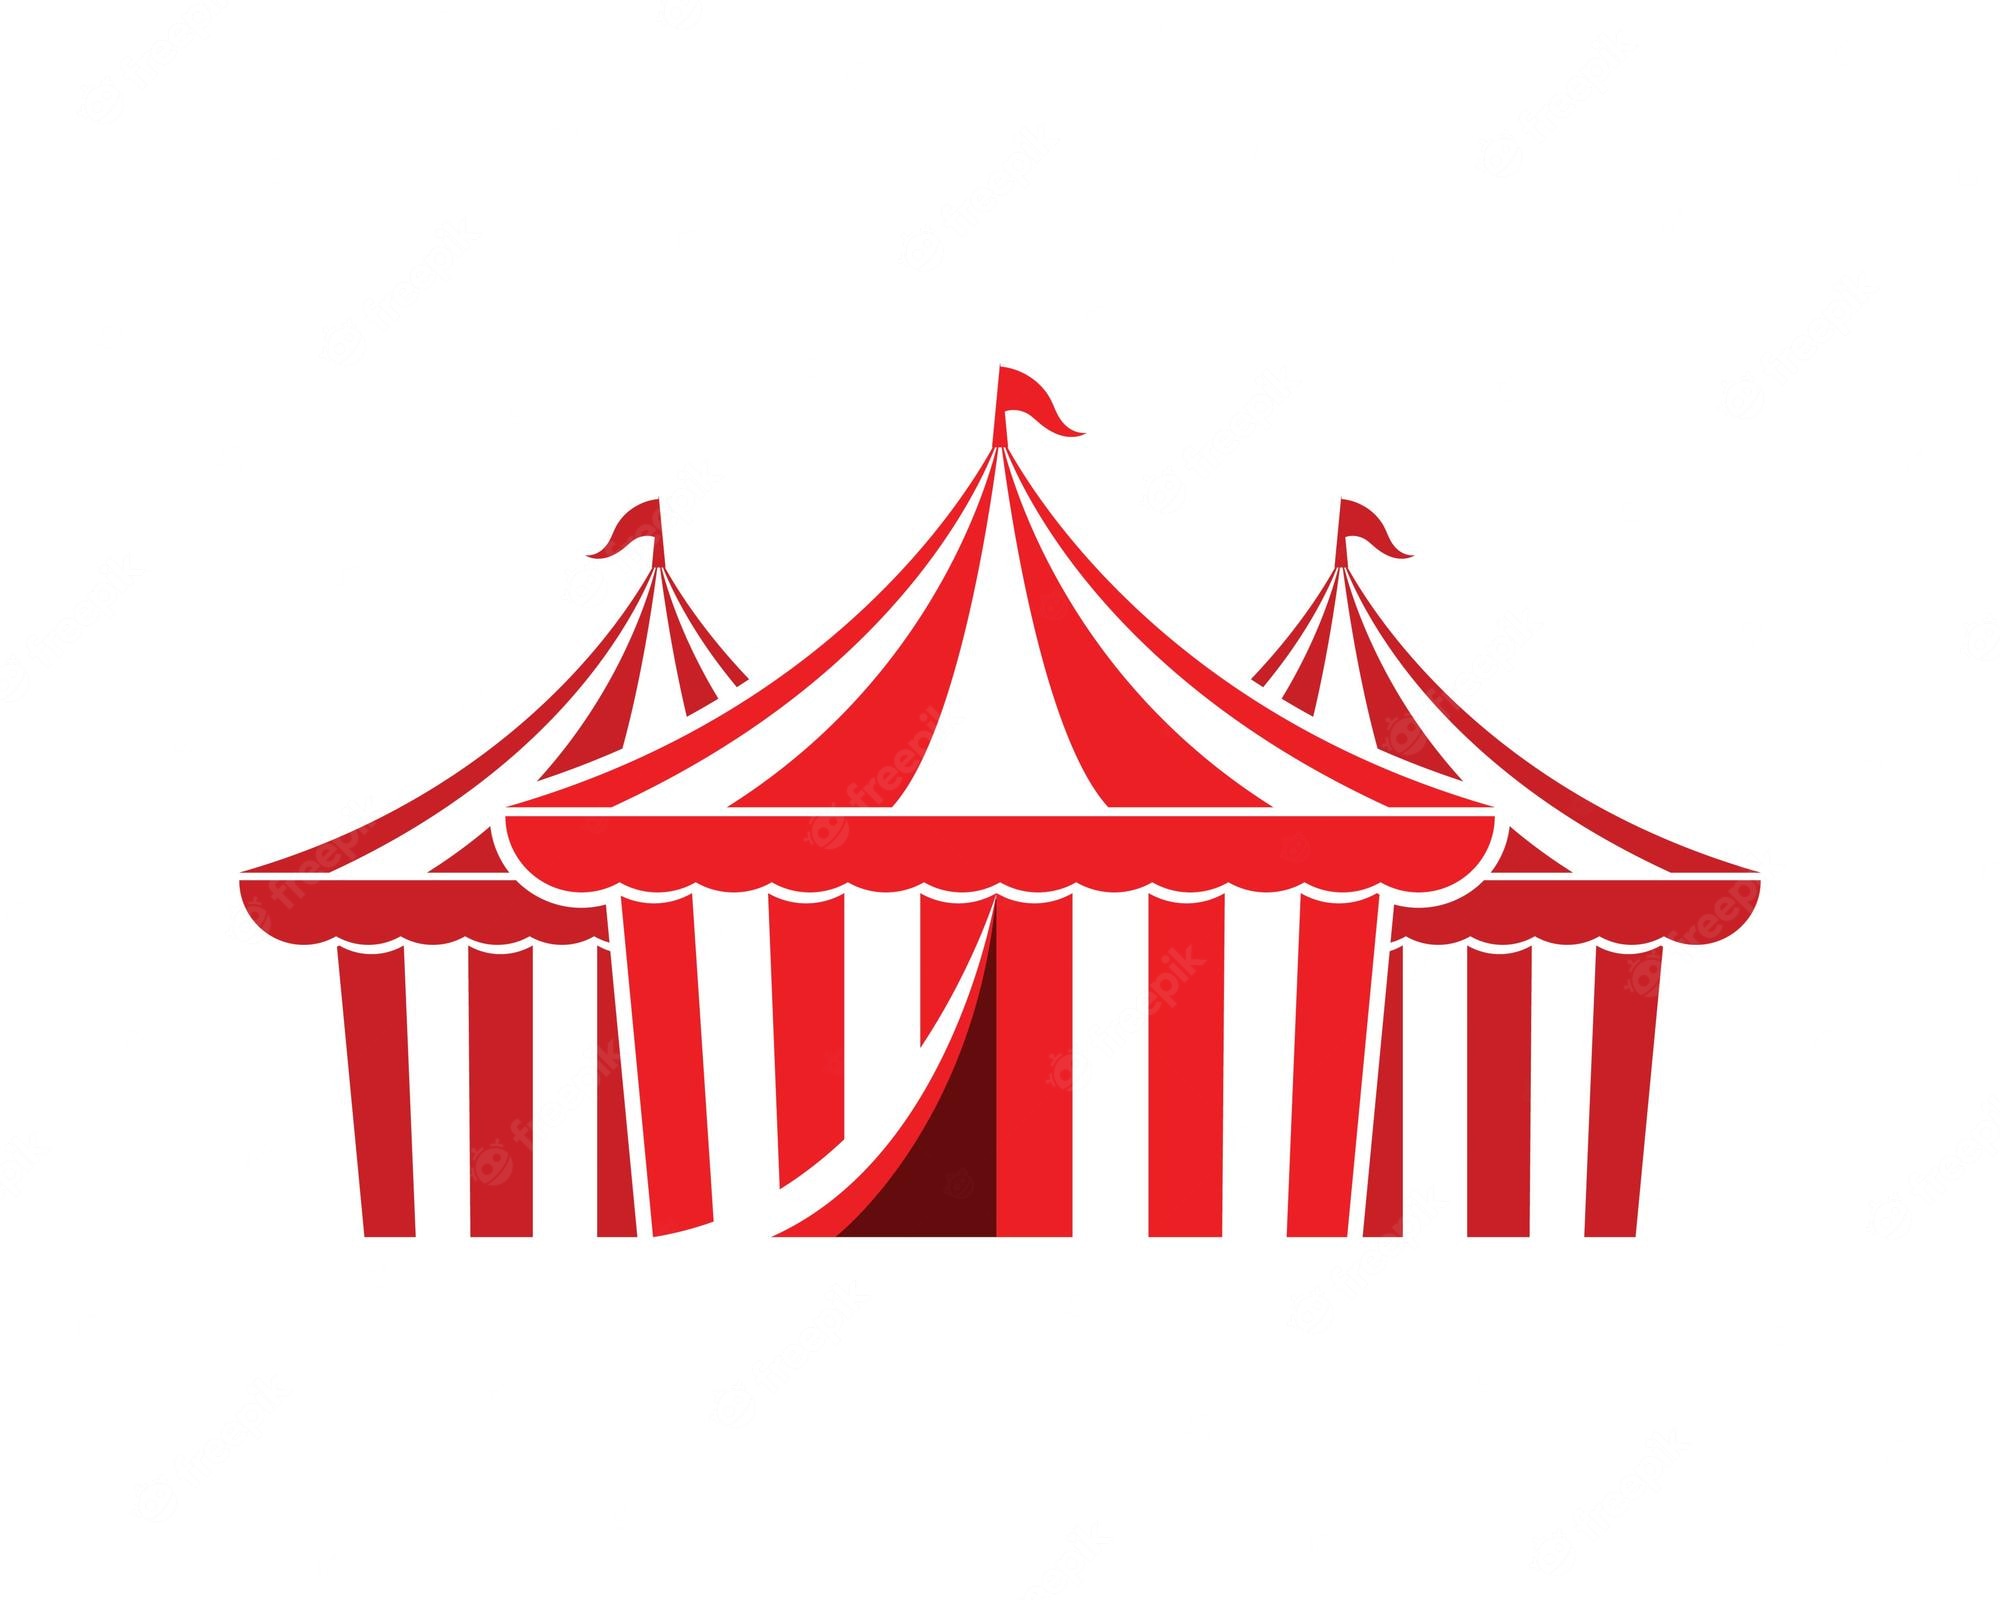 Circus Tent Logo Image. Free Vectors, & PSD